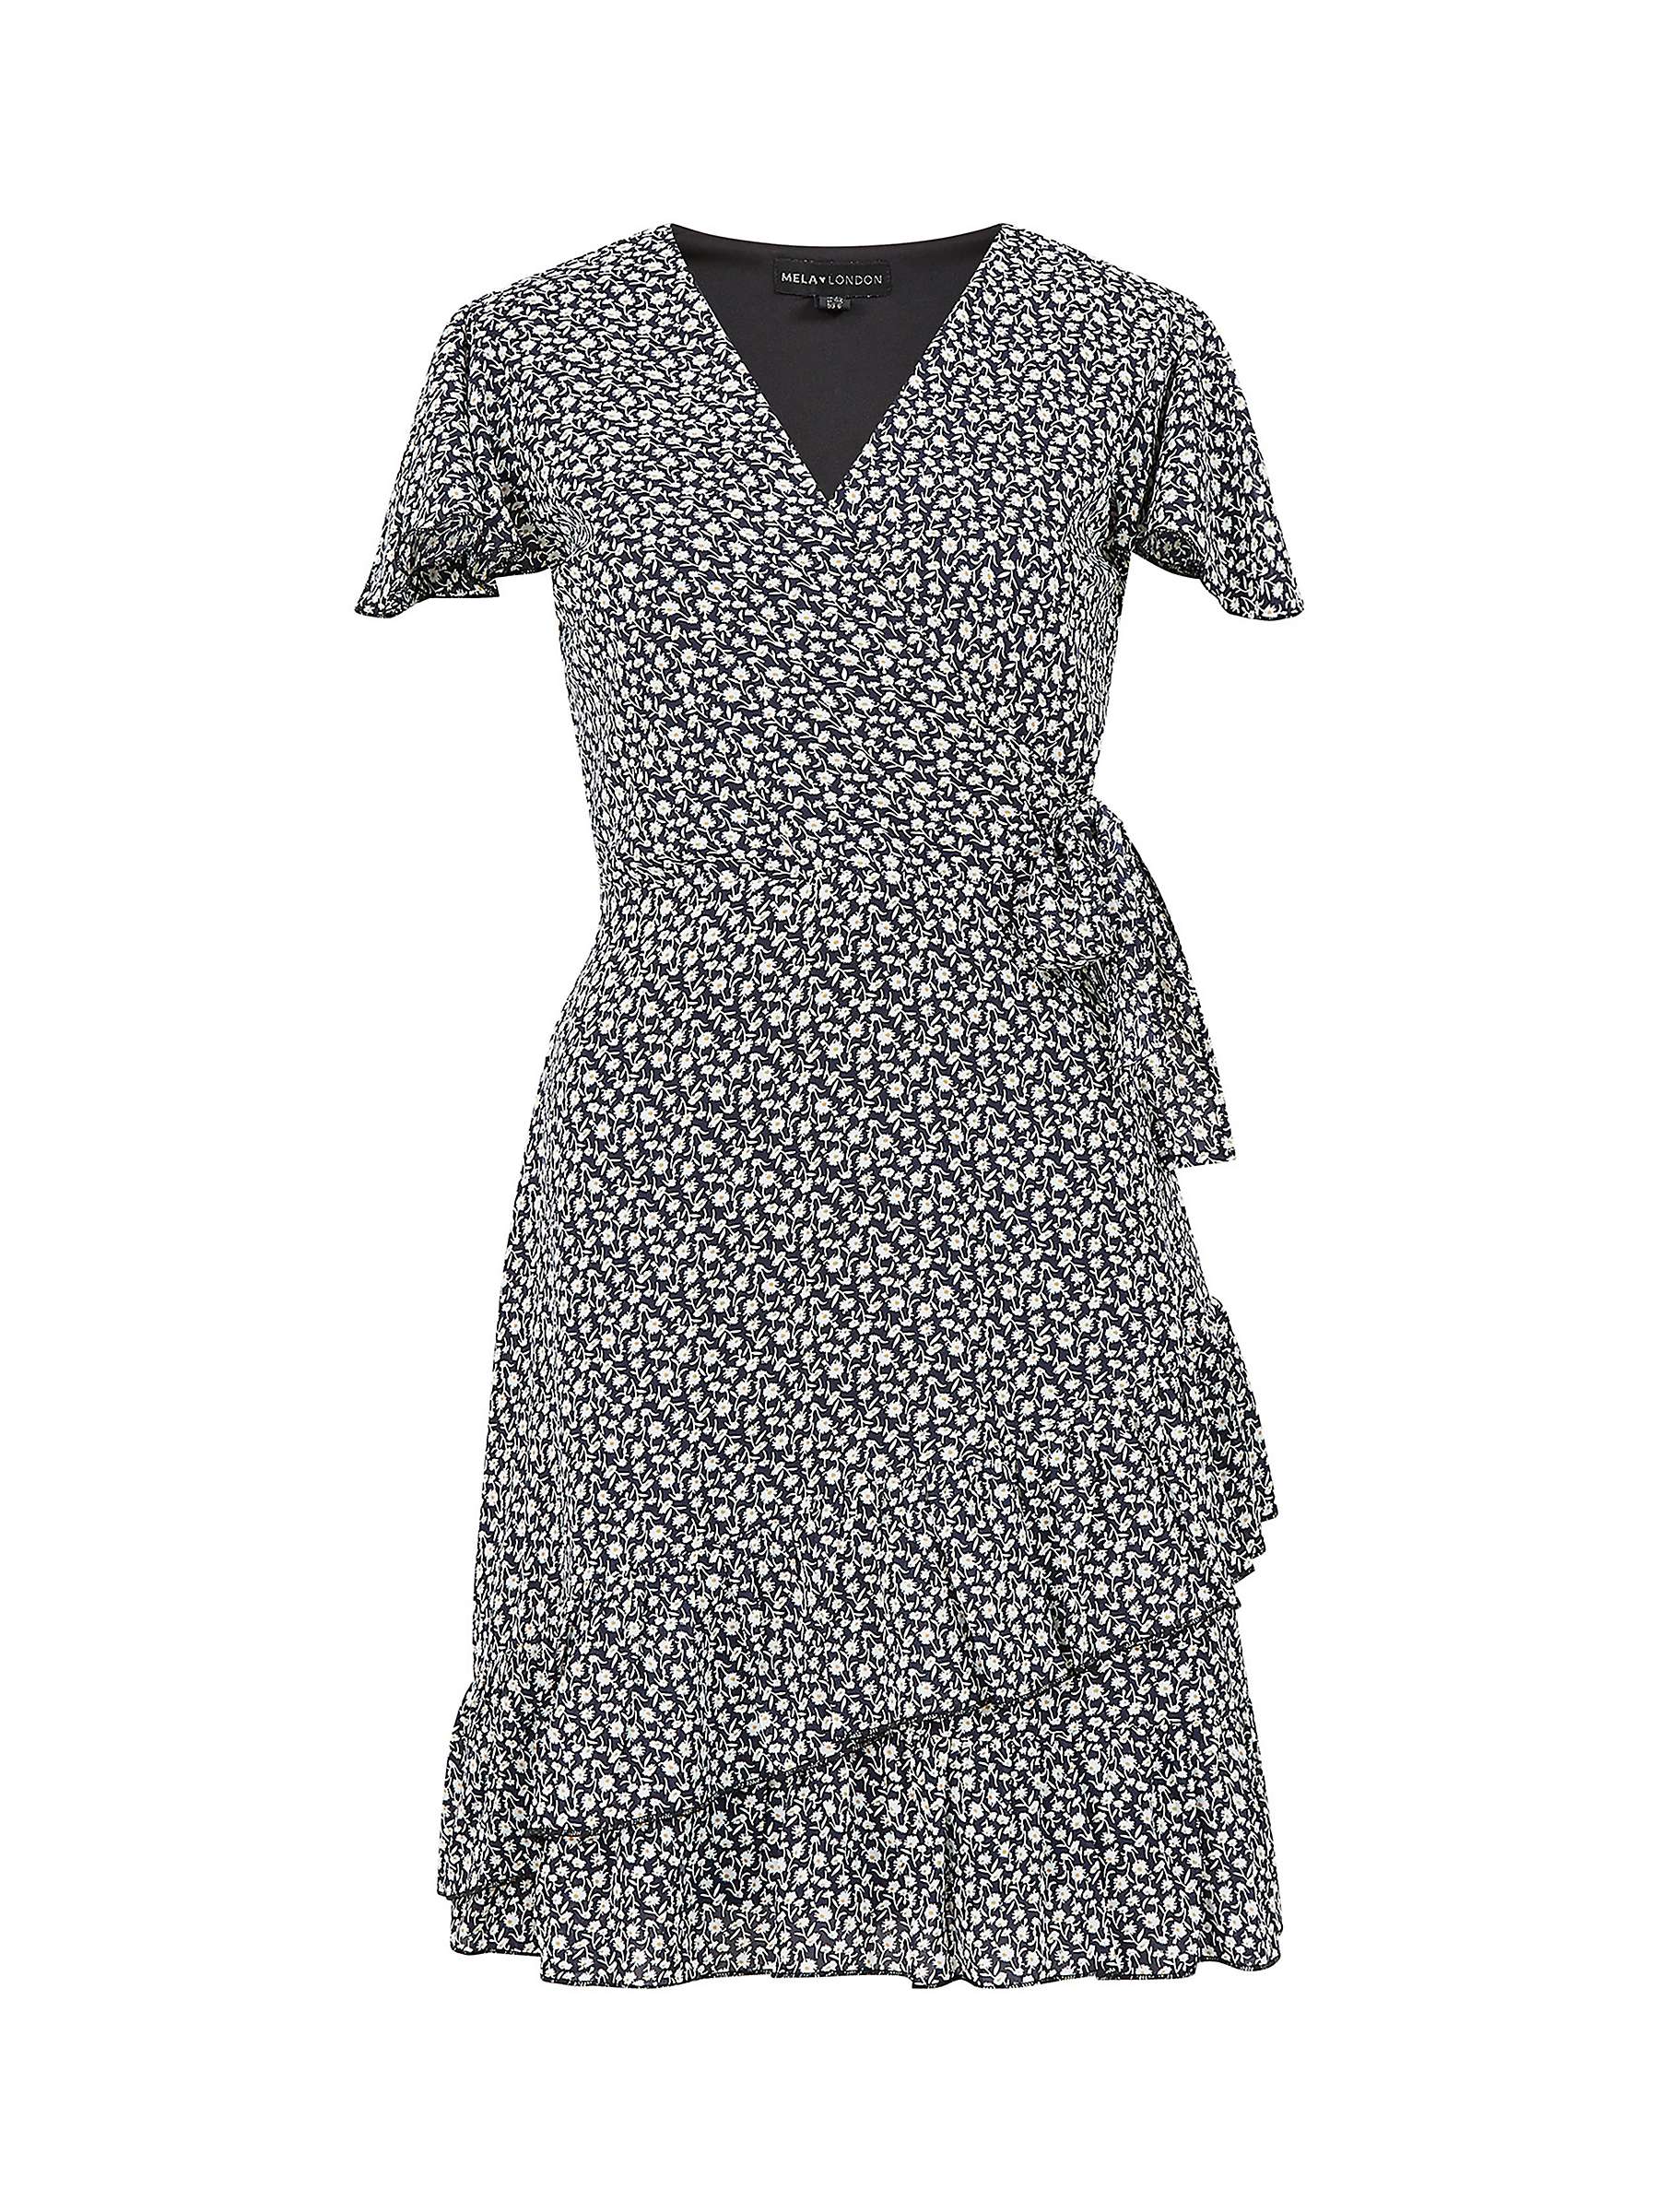 Buy Yumi Mela London Ditsy Daisy Wrap Effect Frill Mini Dress Online at johnlewis.com